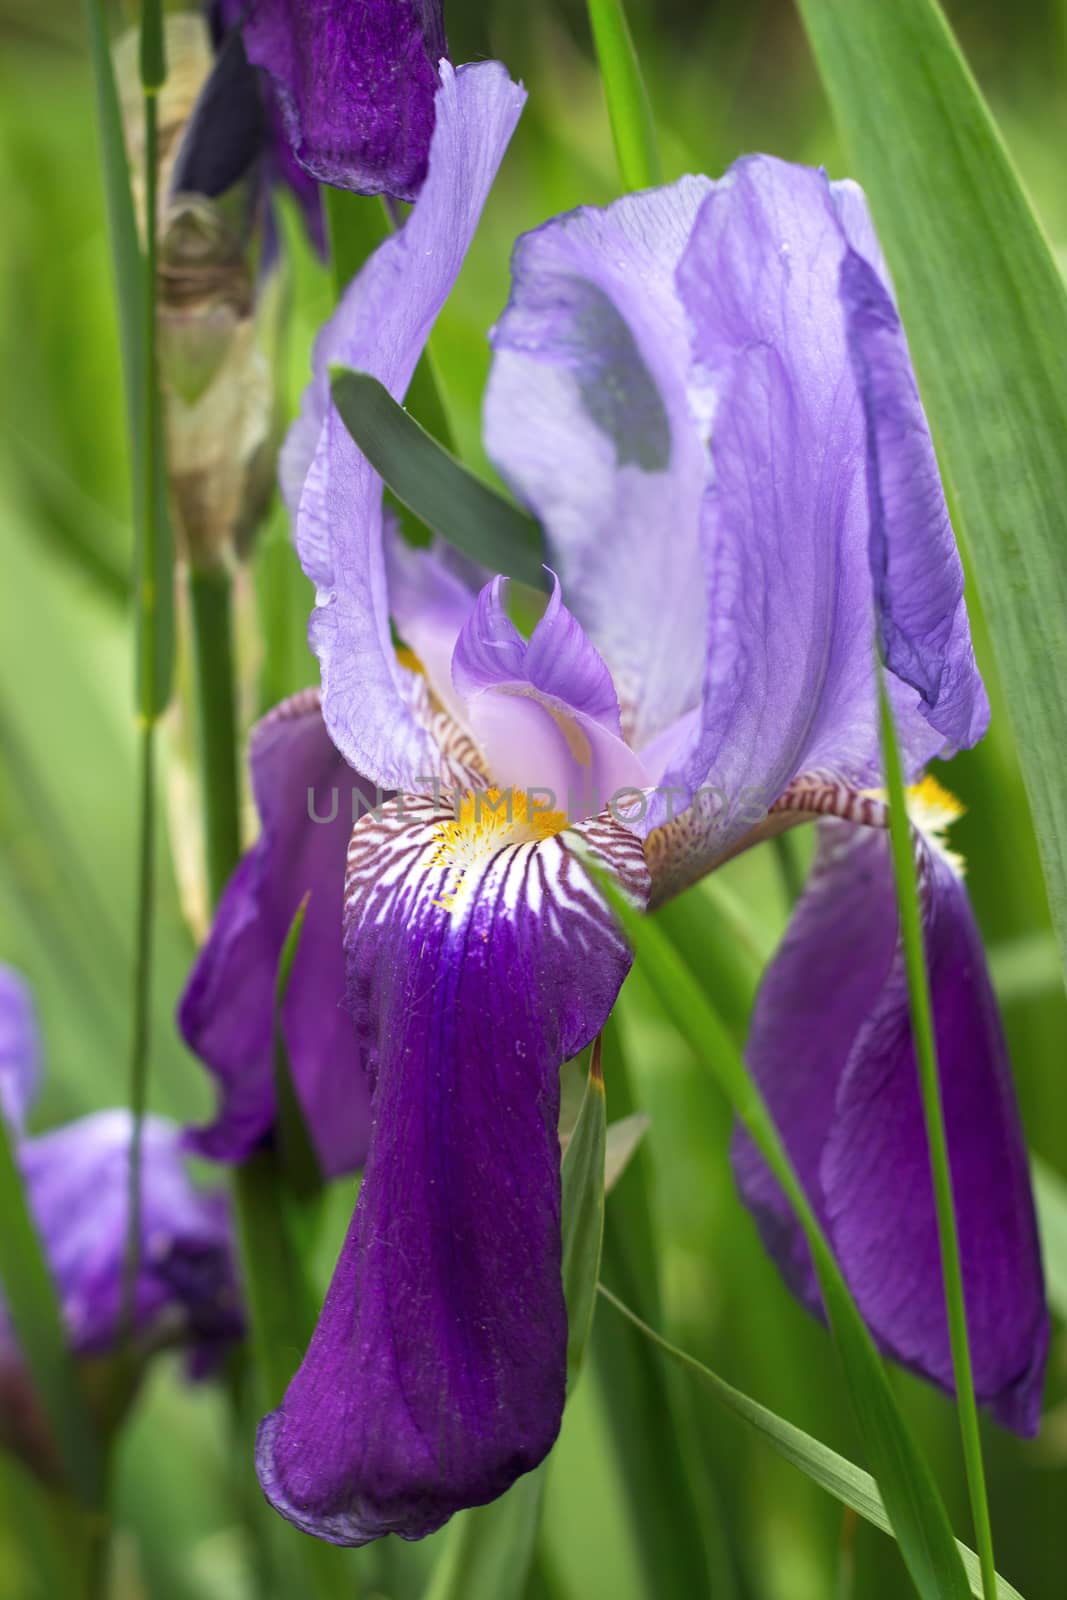 Violet iris flower